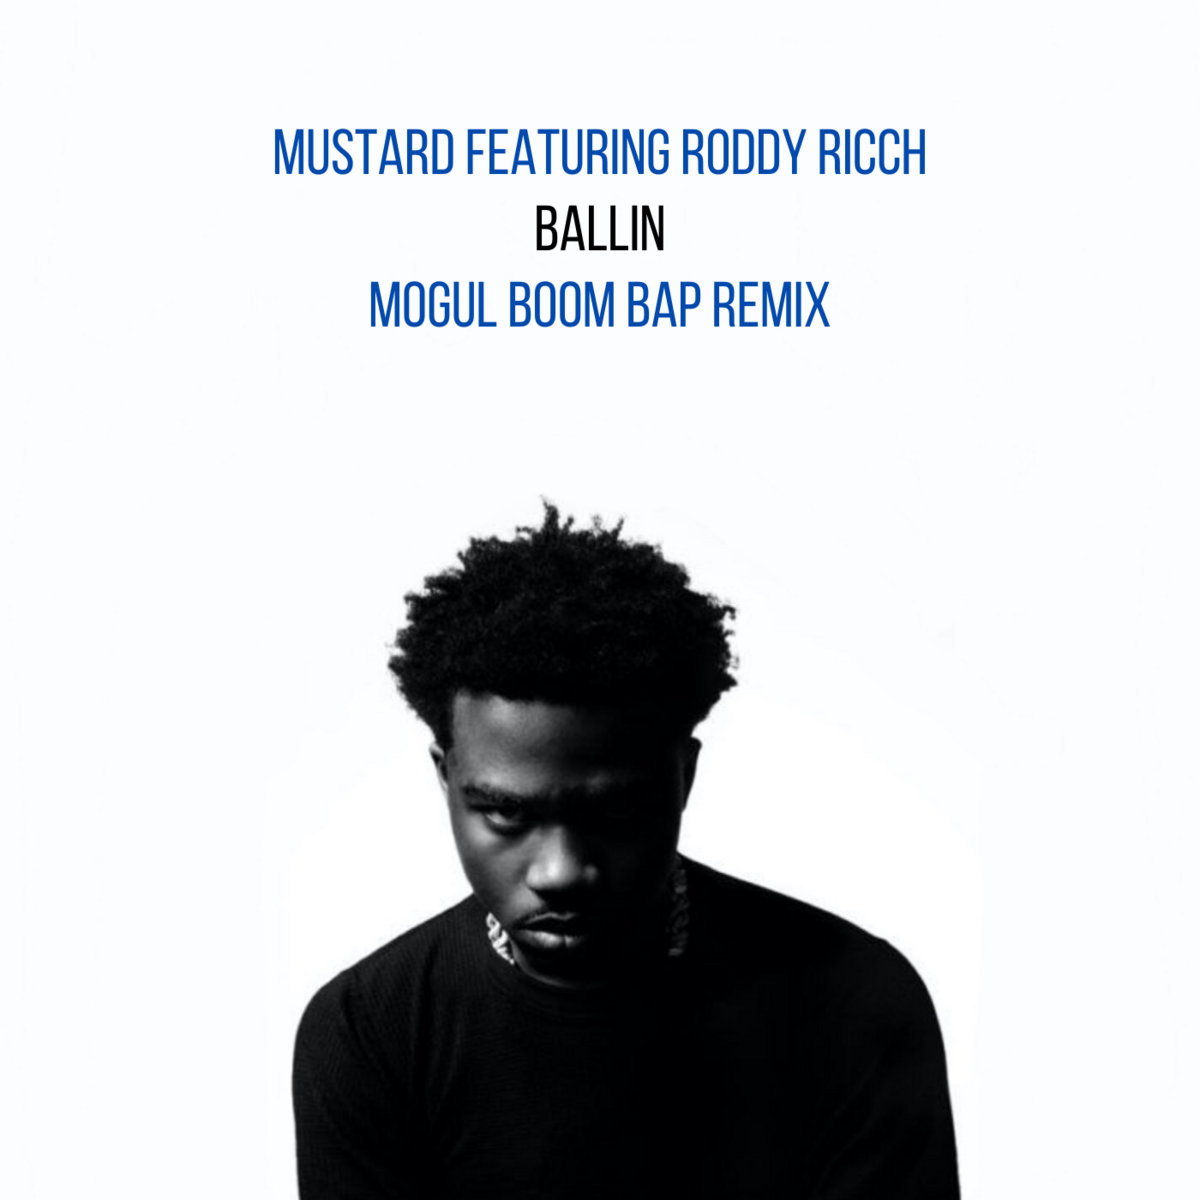 Mustard ballin. Ballin Mustard, Roddy Ricch. Roddy Ricch - Ballin. Mustard - Ballin (Lyrics) feat. Roddy Ricch. :Ballin by Roddy Ricch.